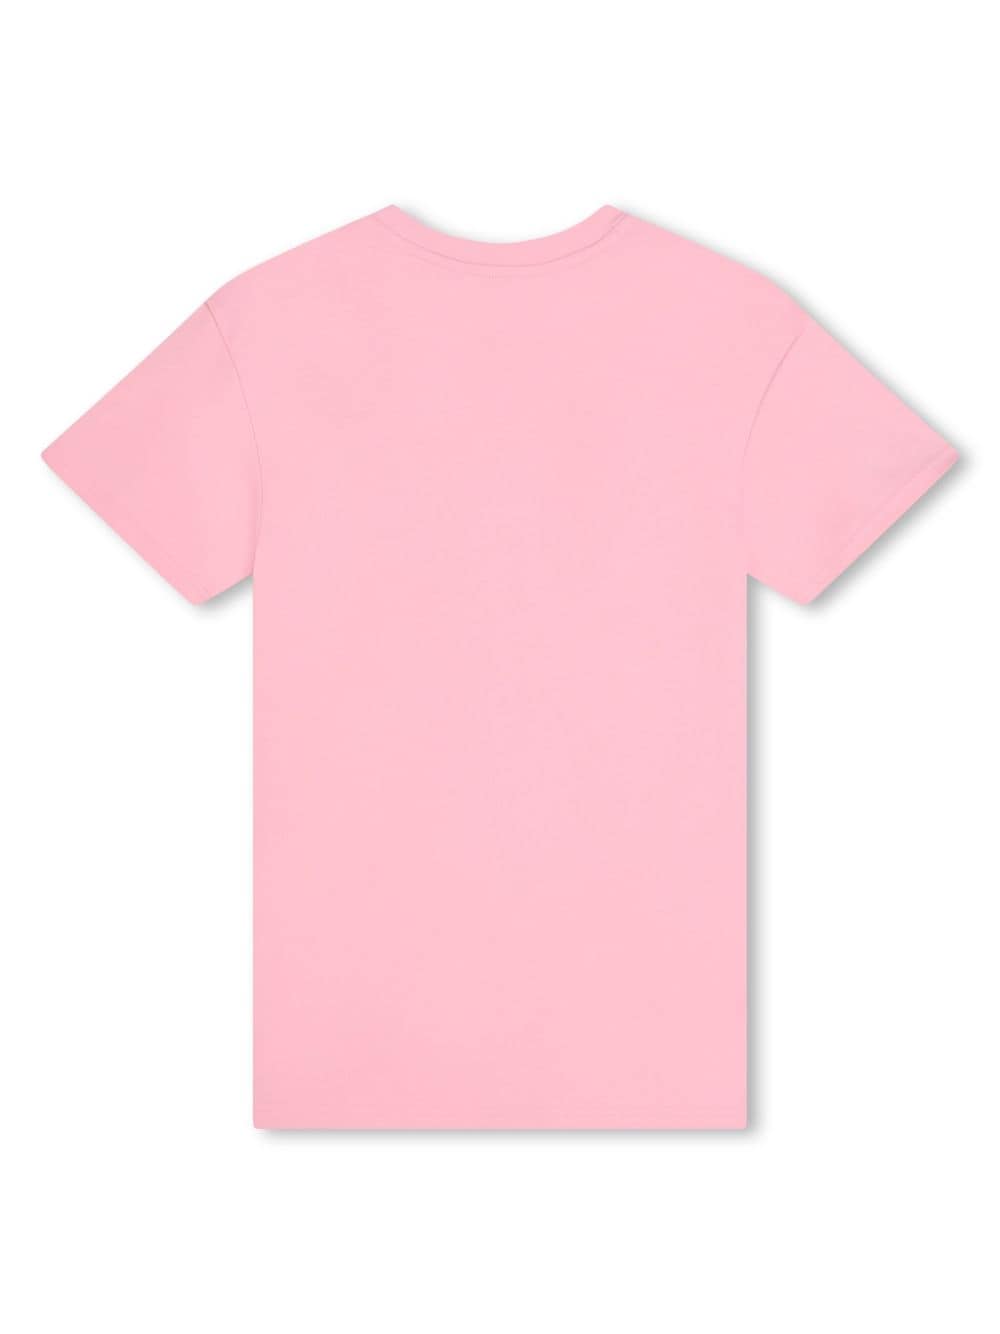 T-shirt rosa stampa borsa